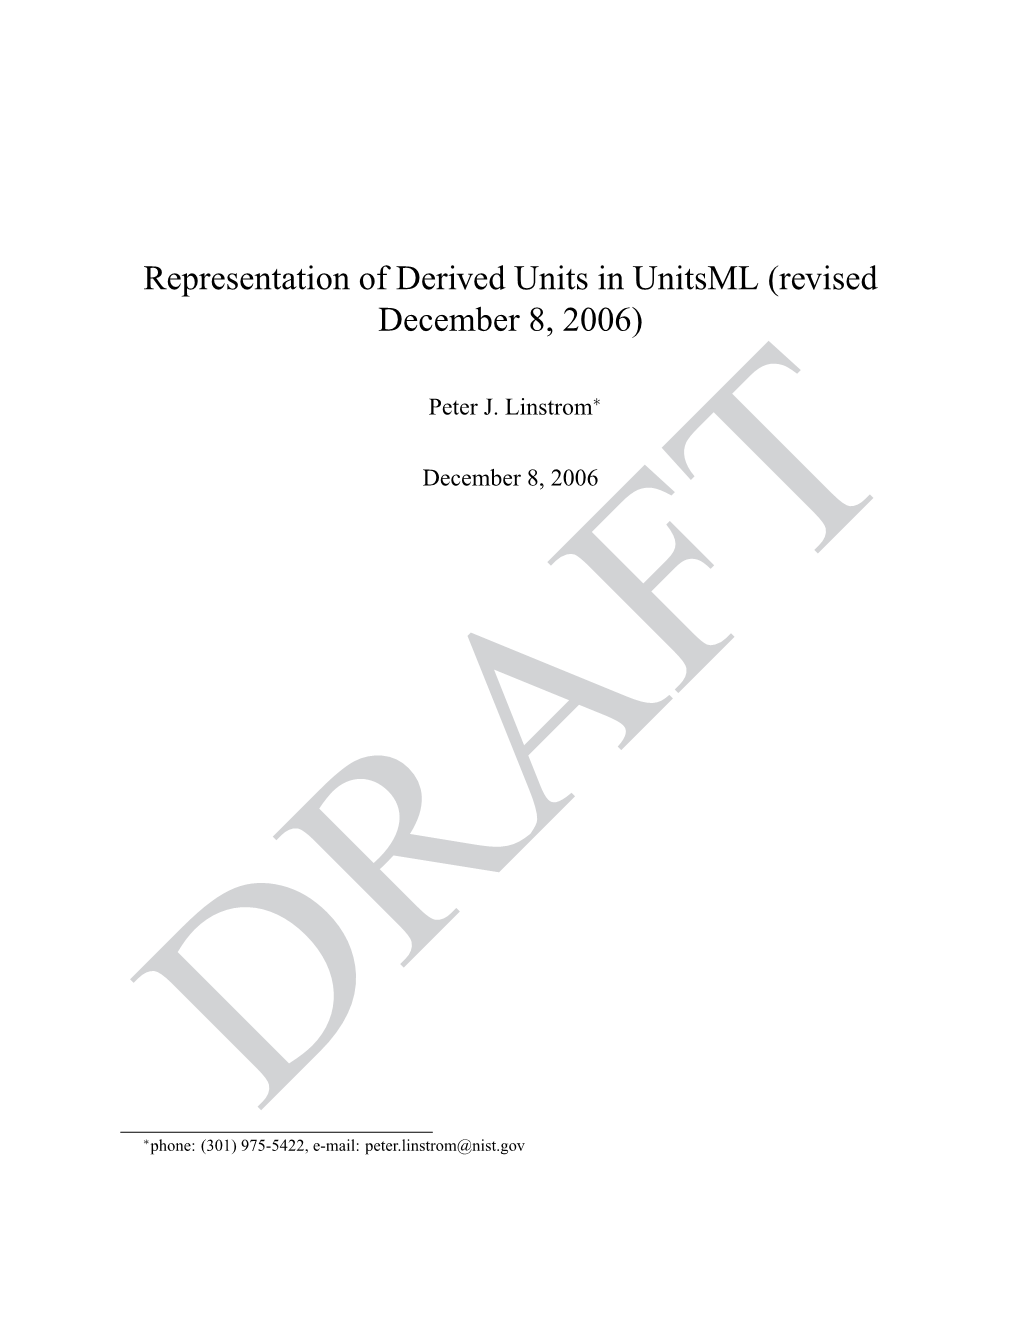 Representation of Derived Units in Unitsml (Revised December 8, 2006)